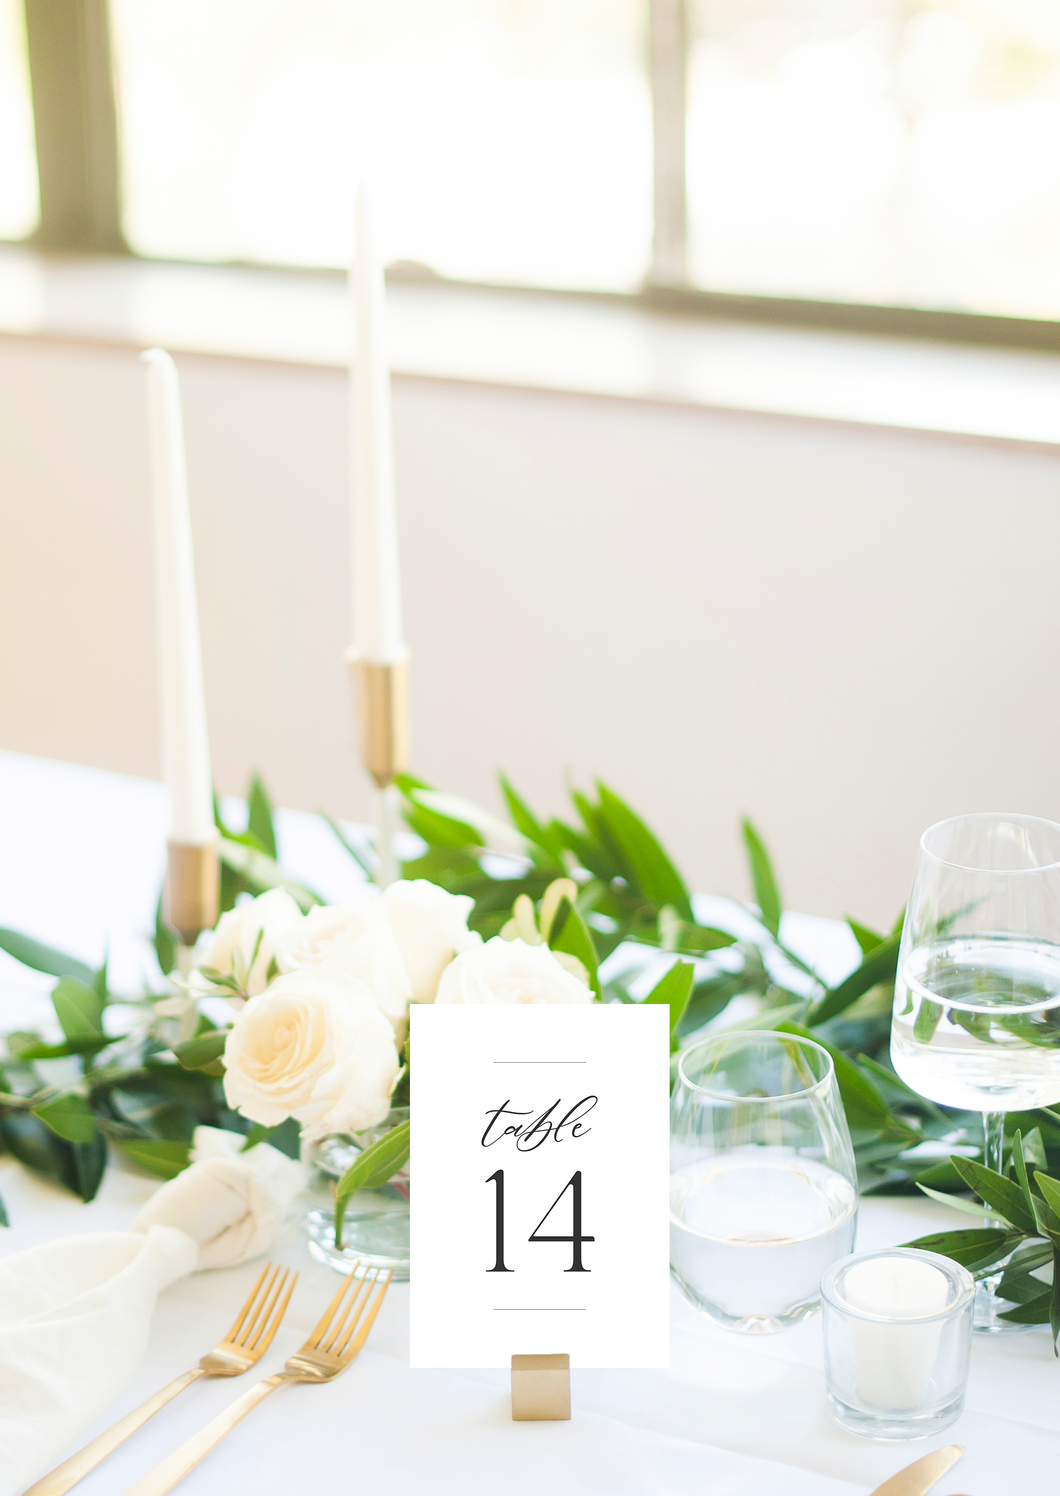 Elegant Black and White Wedding Table Numbers